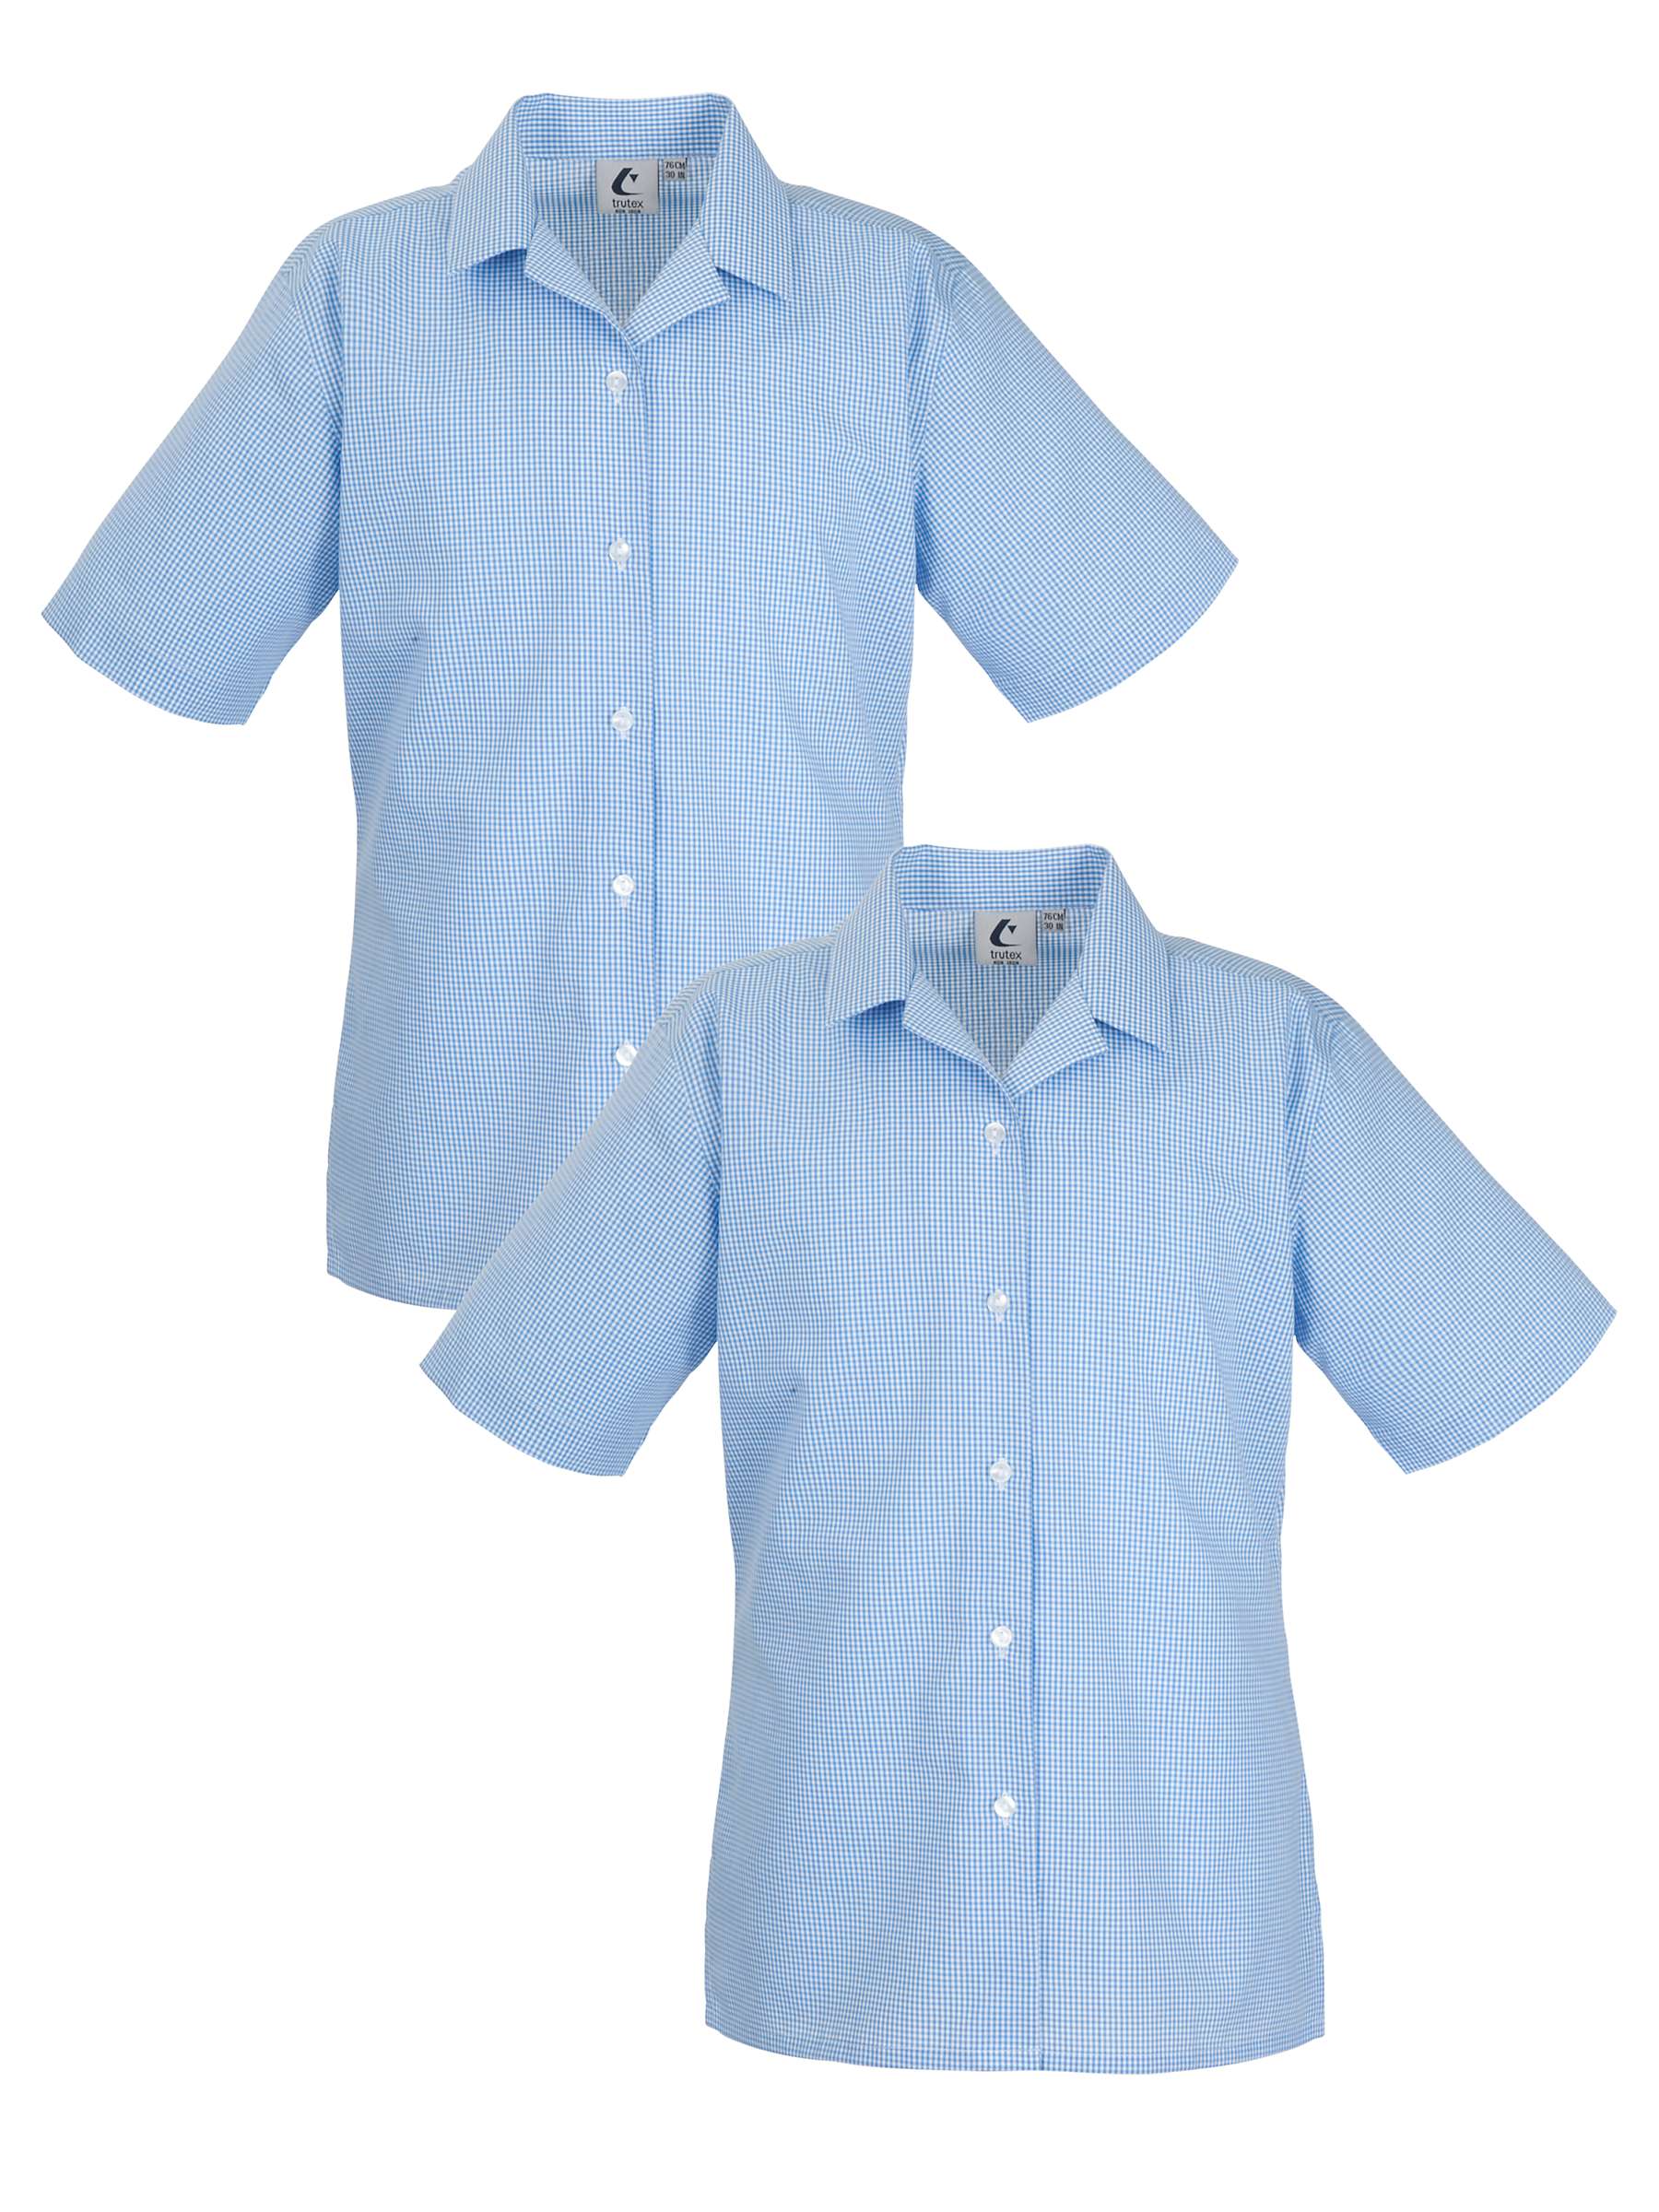 Buy Girls' School Short Sleeve Checked Blouse, Pack of 2, Blue/White Online at johnlewis.com